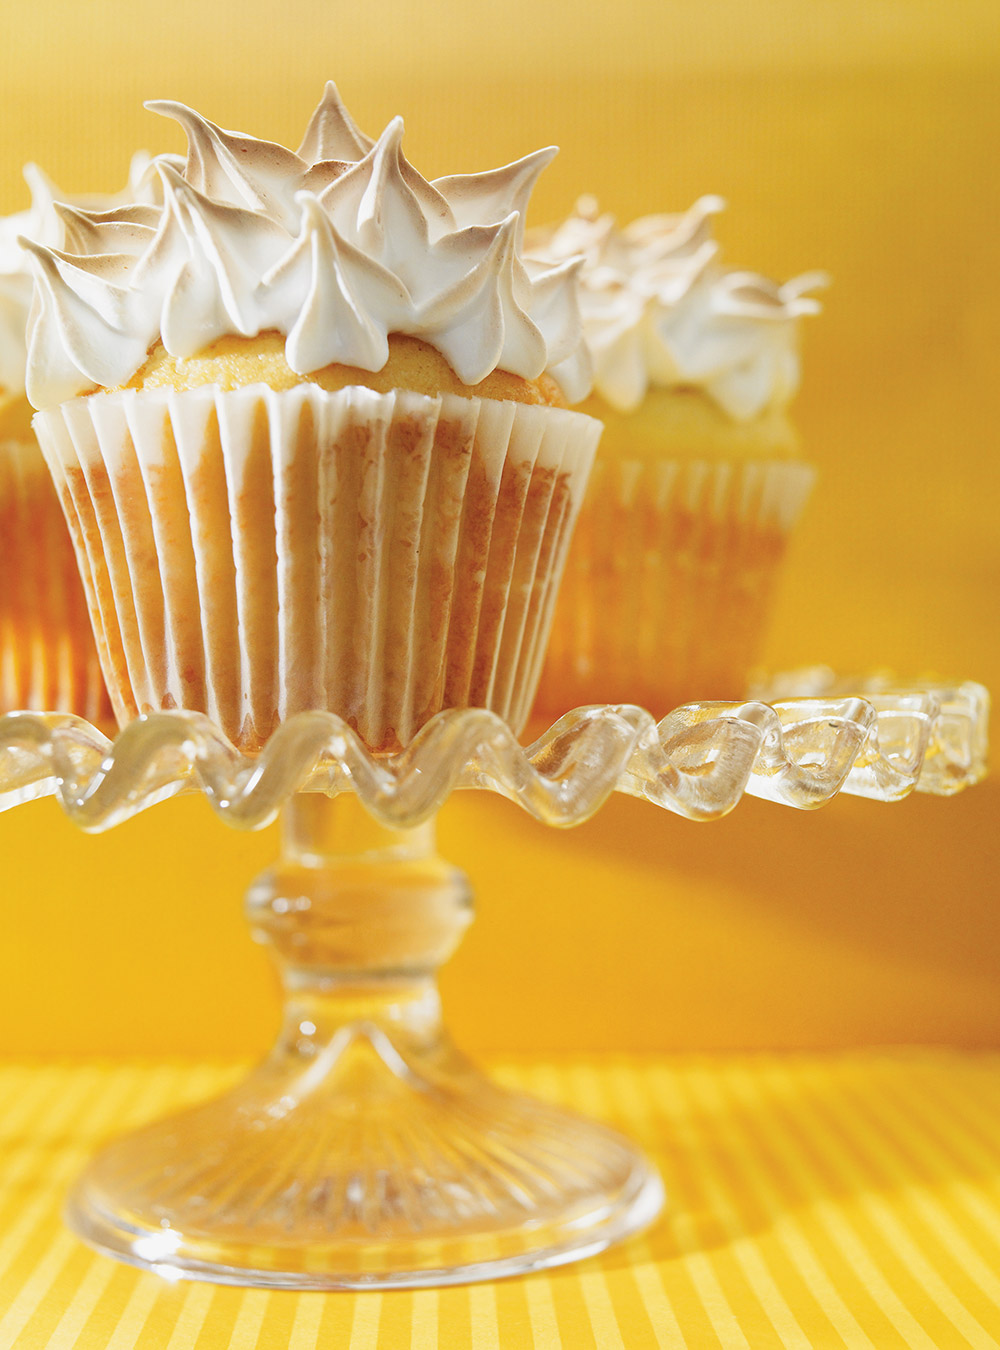 Lemon-Filled Meringue Cupcakes